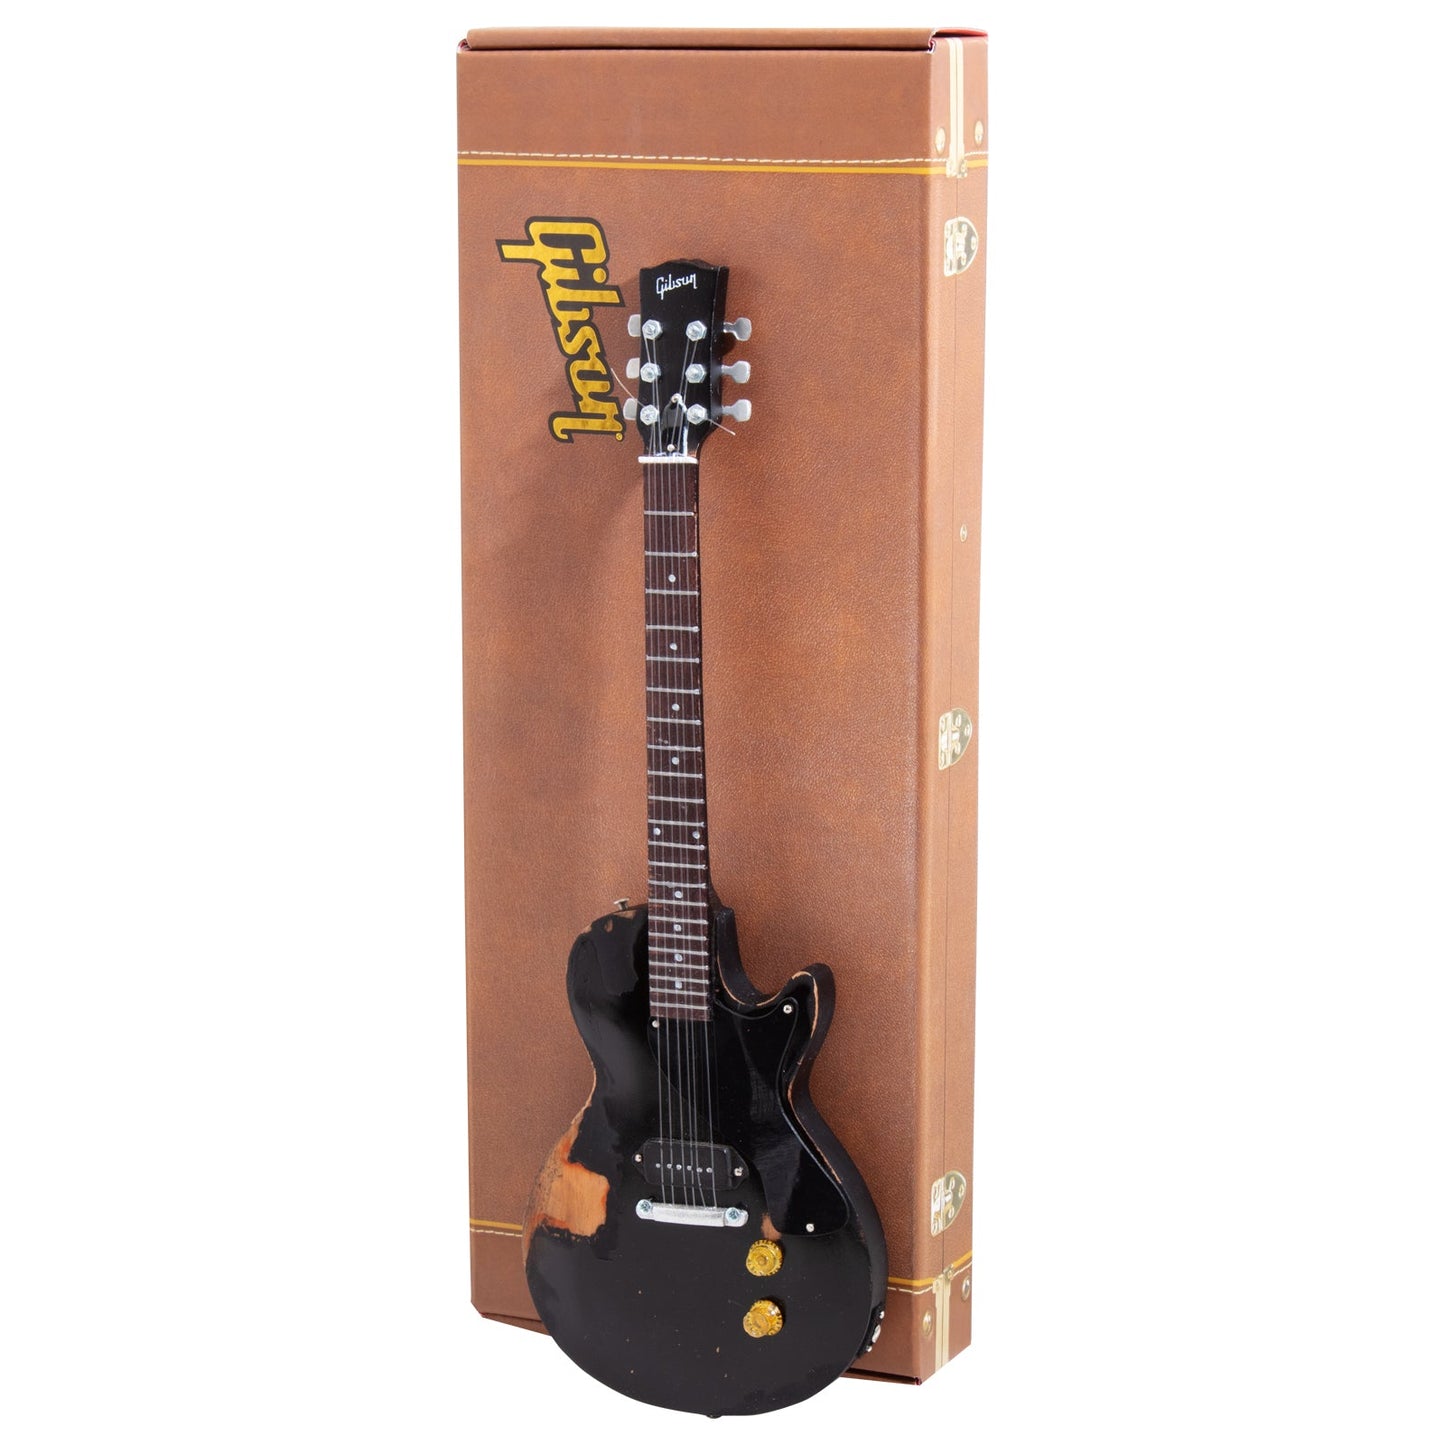 Charlie Starr Gibson 1956 Les Paul Jr  1.4 Scale Mini Guitar Model